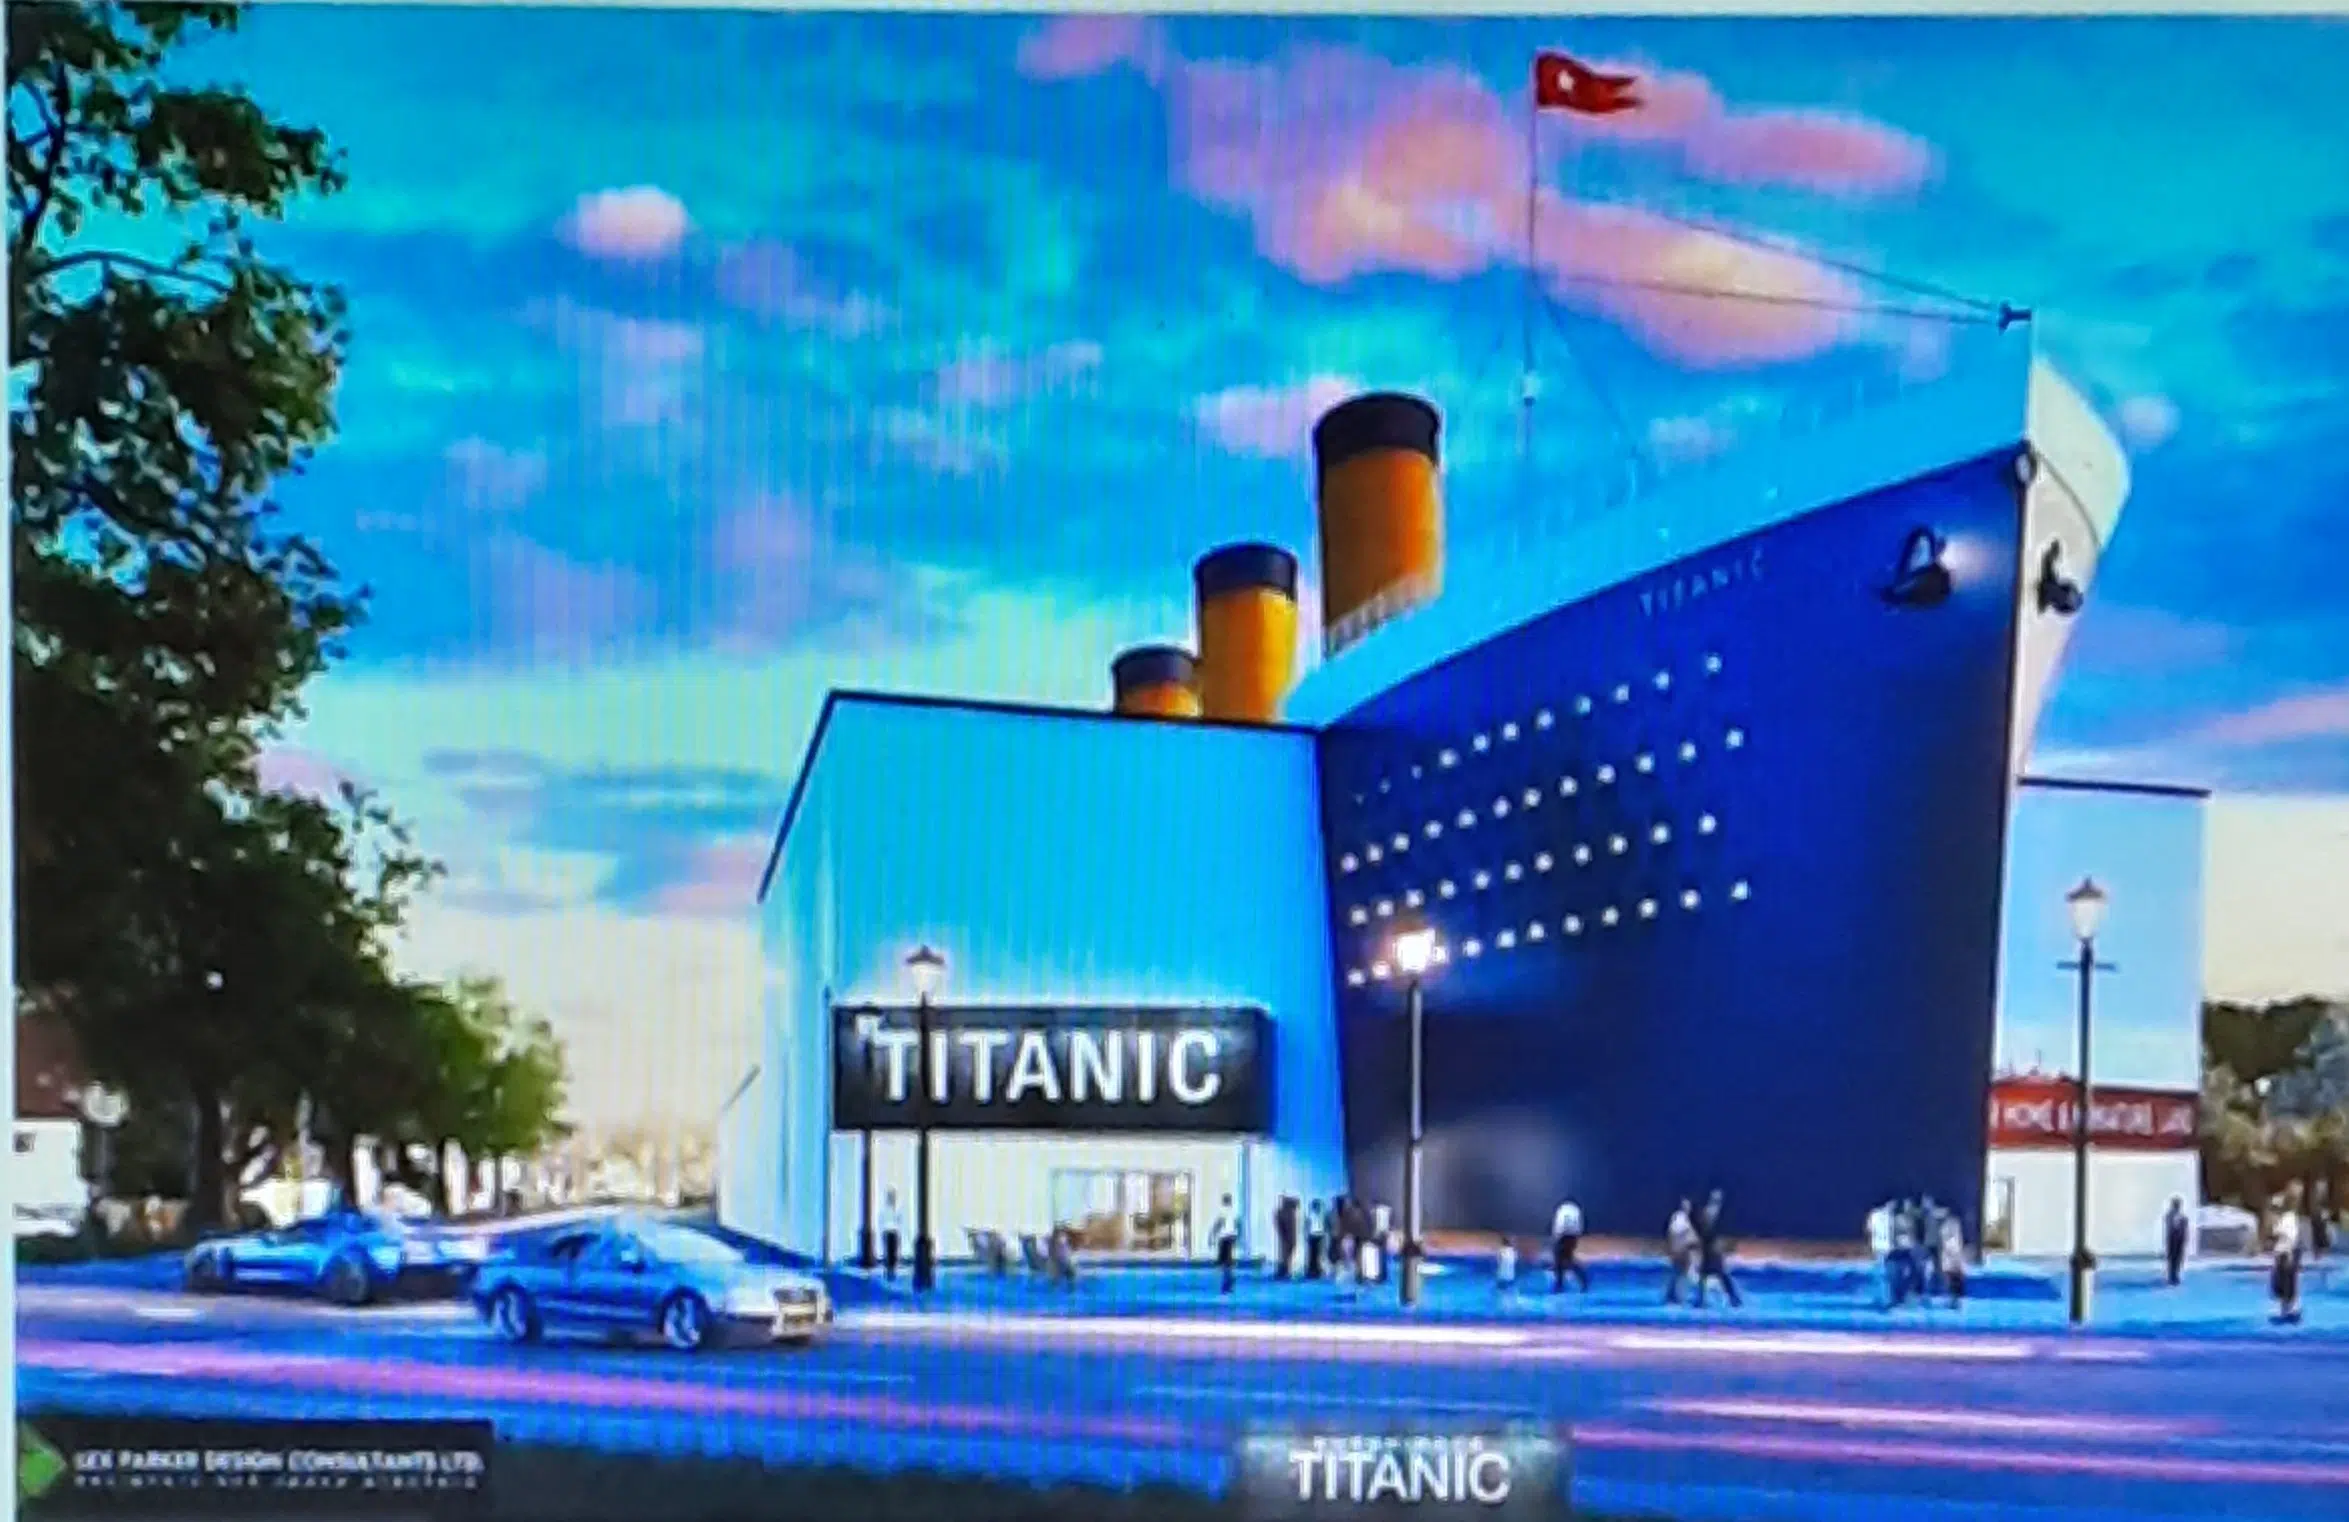 Nova Scotia could become home to replica Titanic